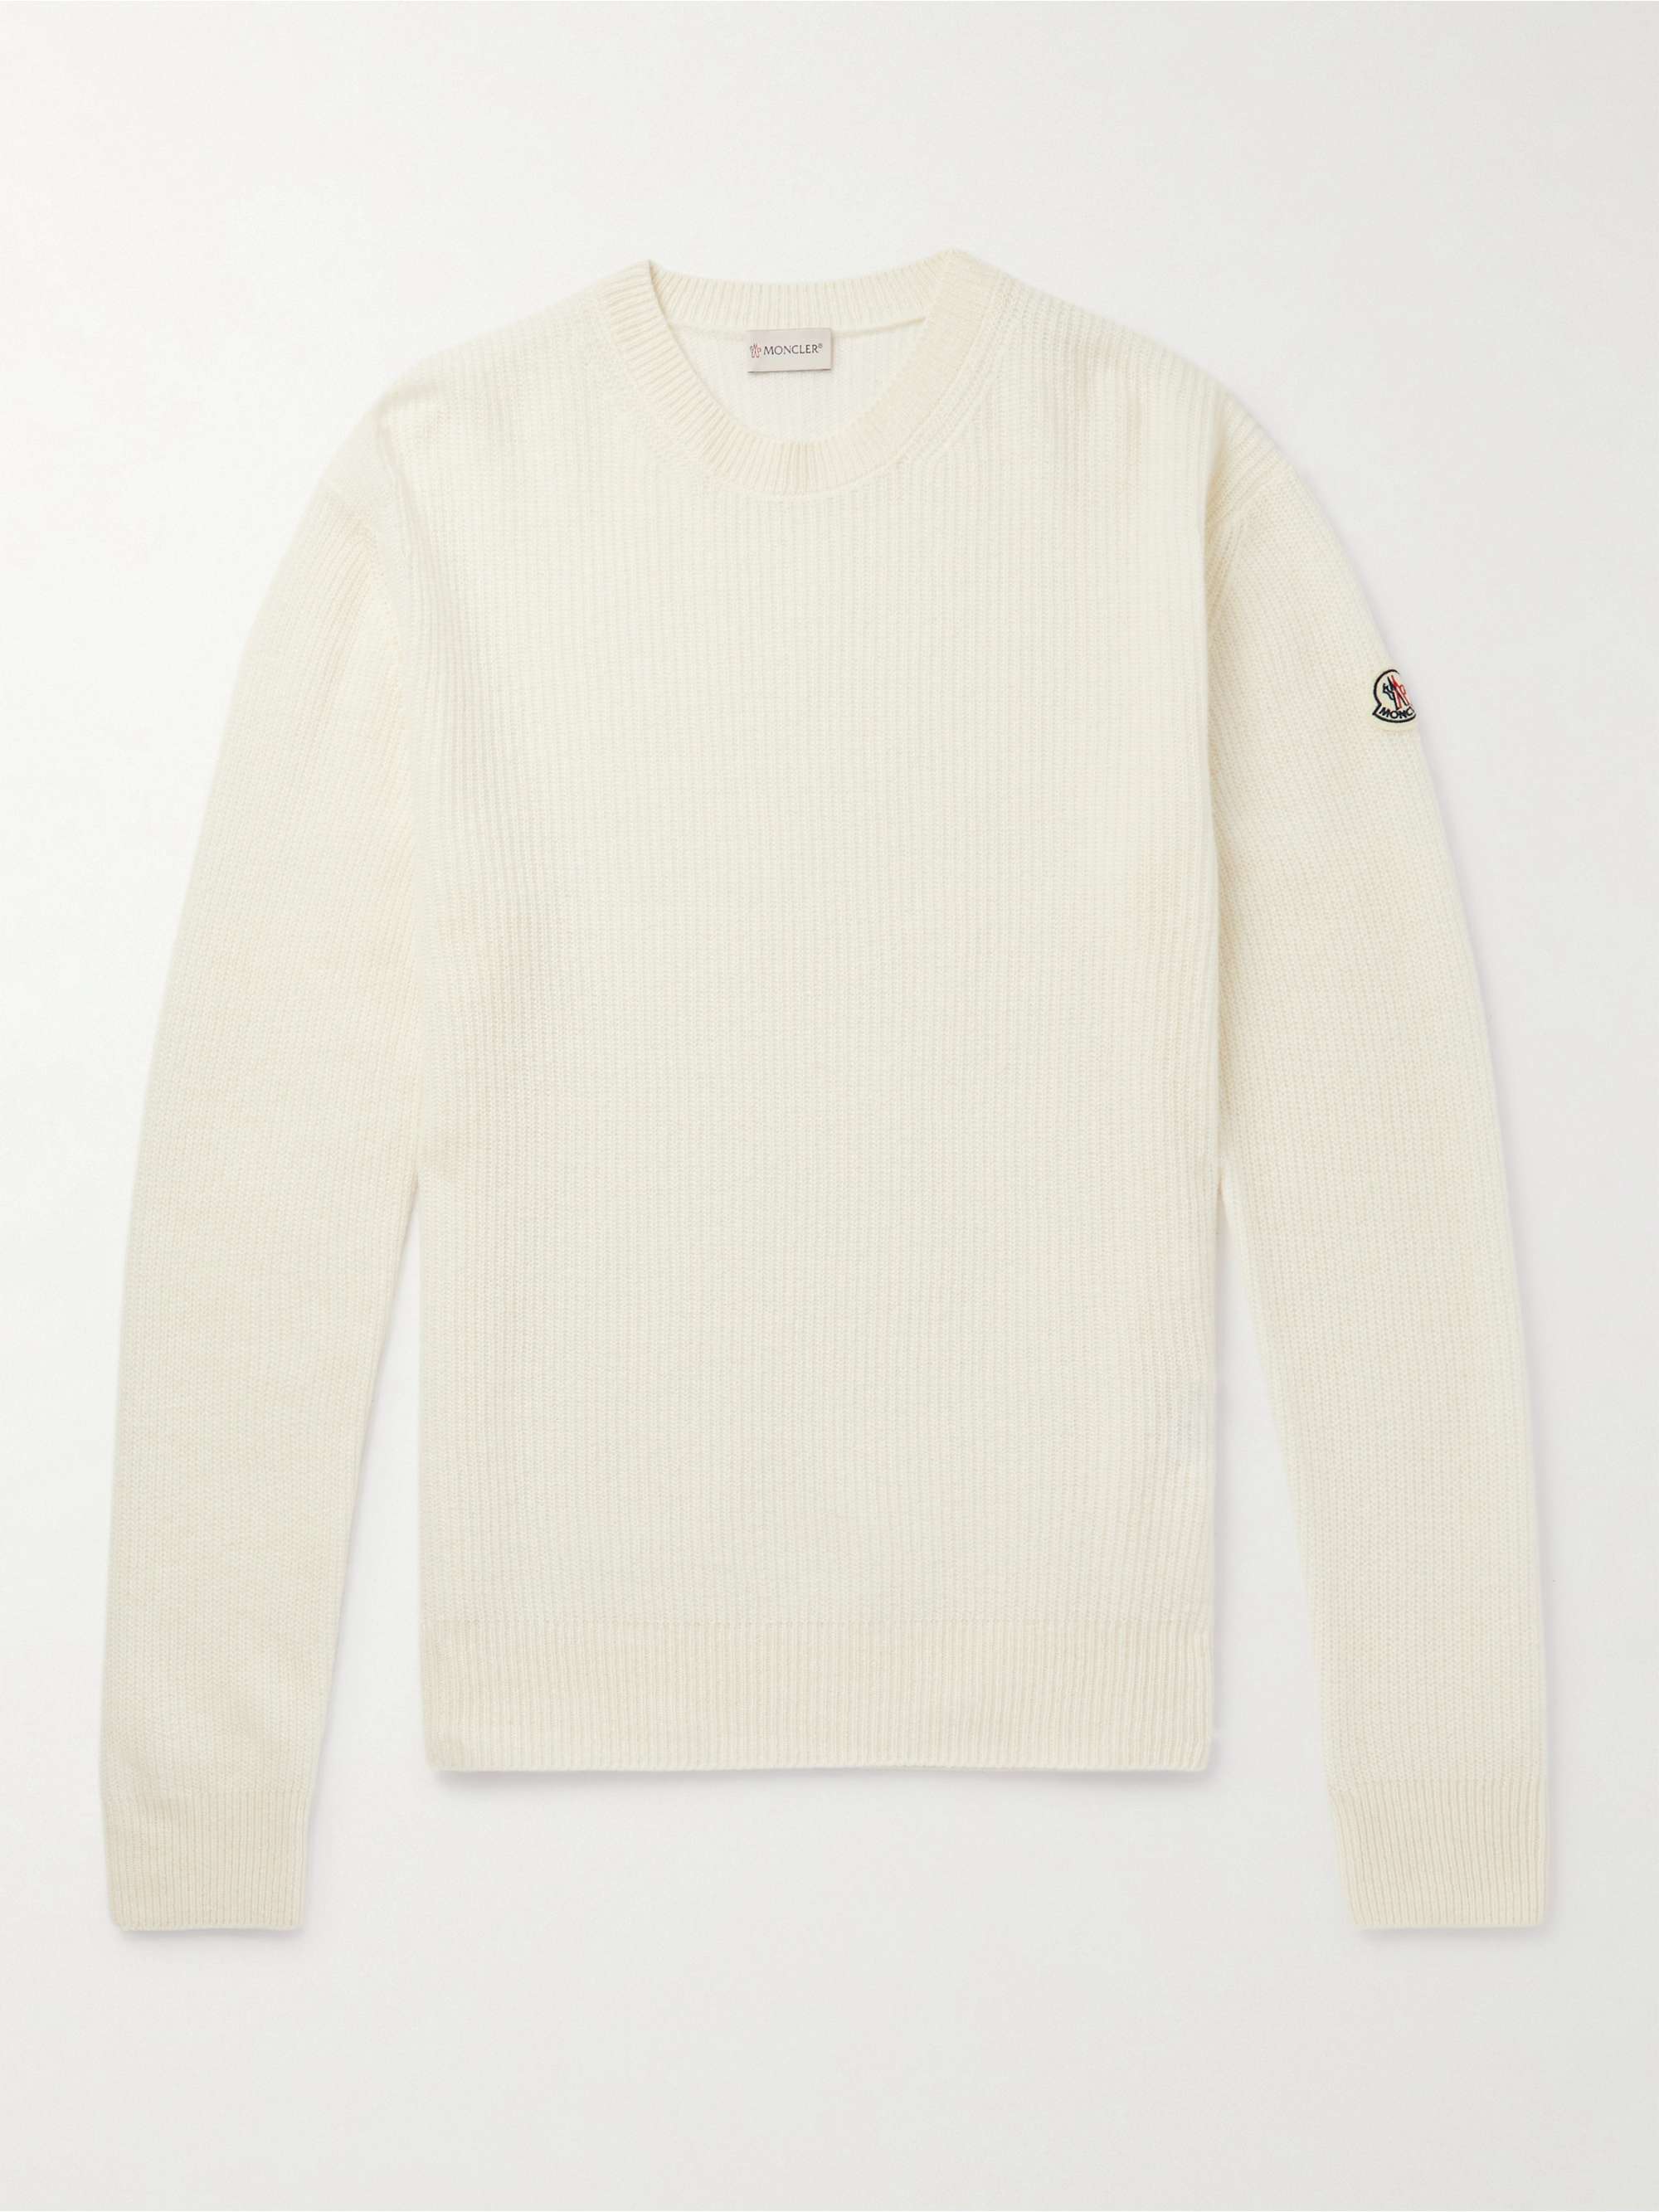 MONCLER Ribbed Virgin Wool and Cashmere-Blend Sweater for Men | MR PORTER